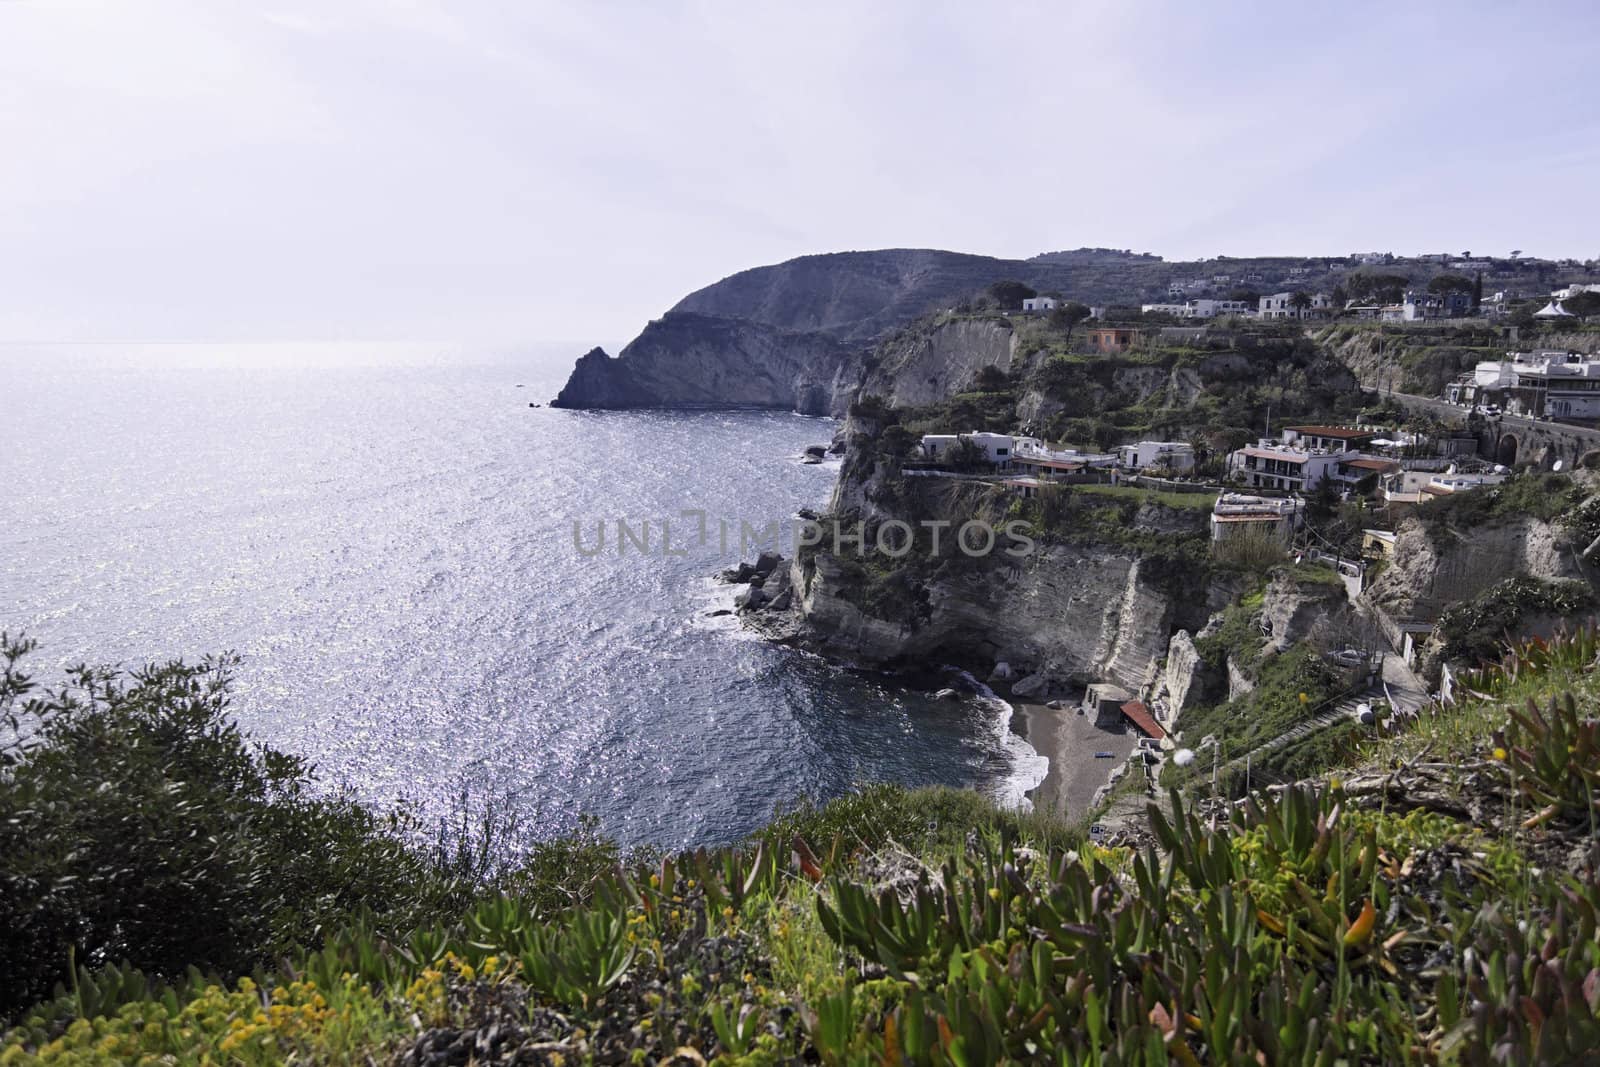 ITALY, Campania, Ischia island, S.Angelo, view of S.Angelo rocky coast